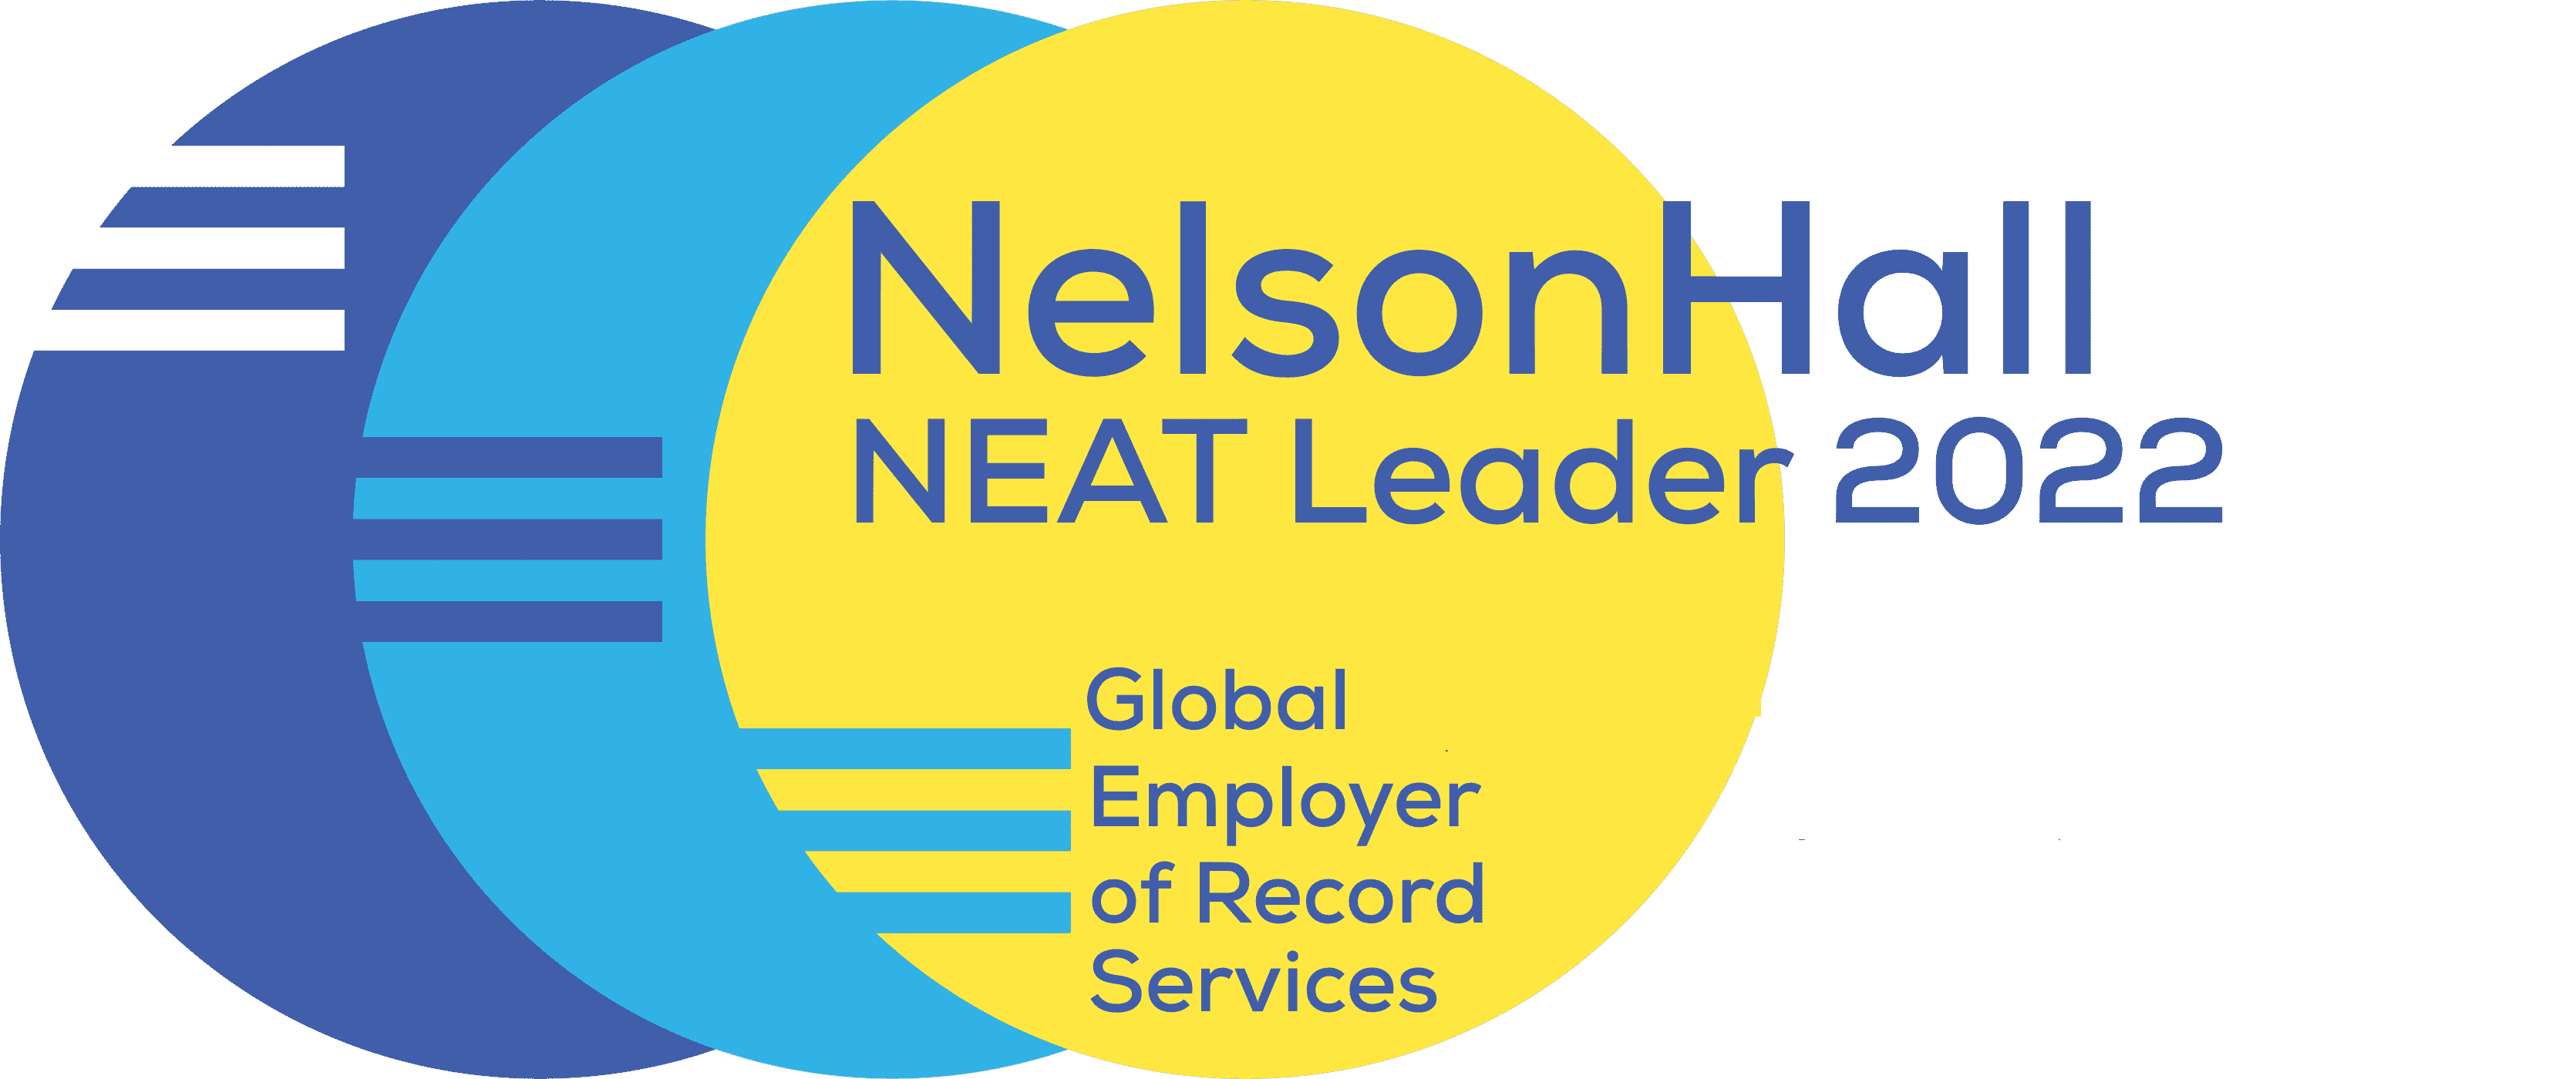 NelsonHall—透過洞見轉化 